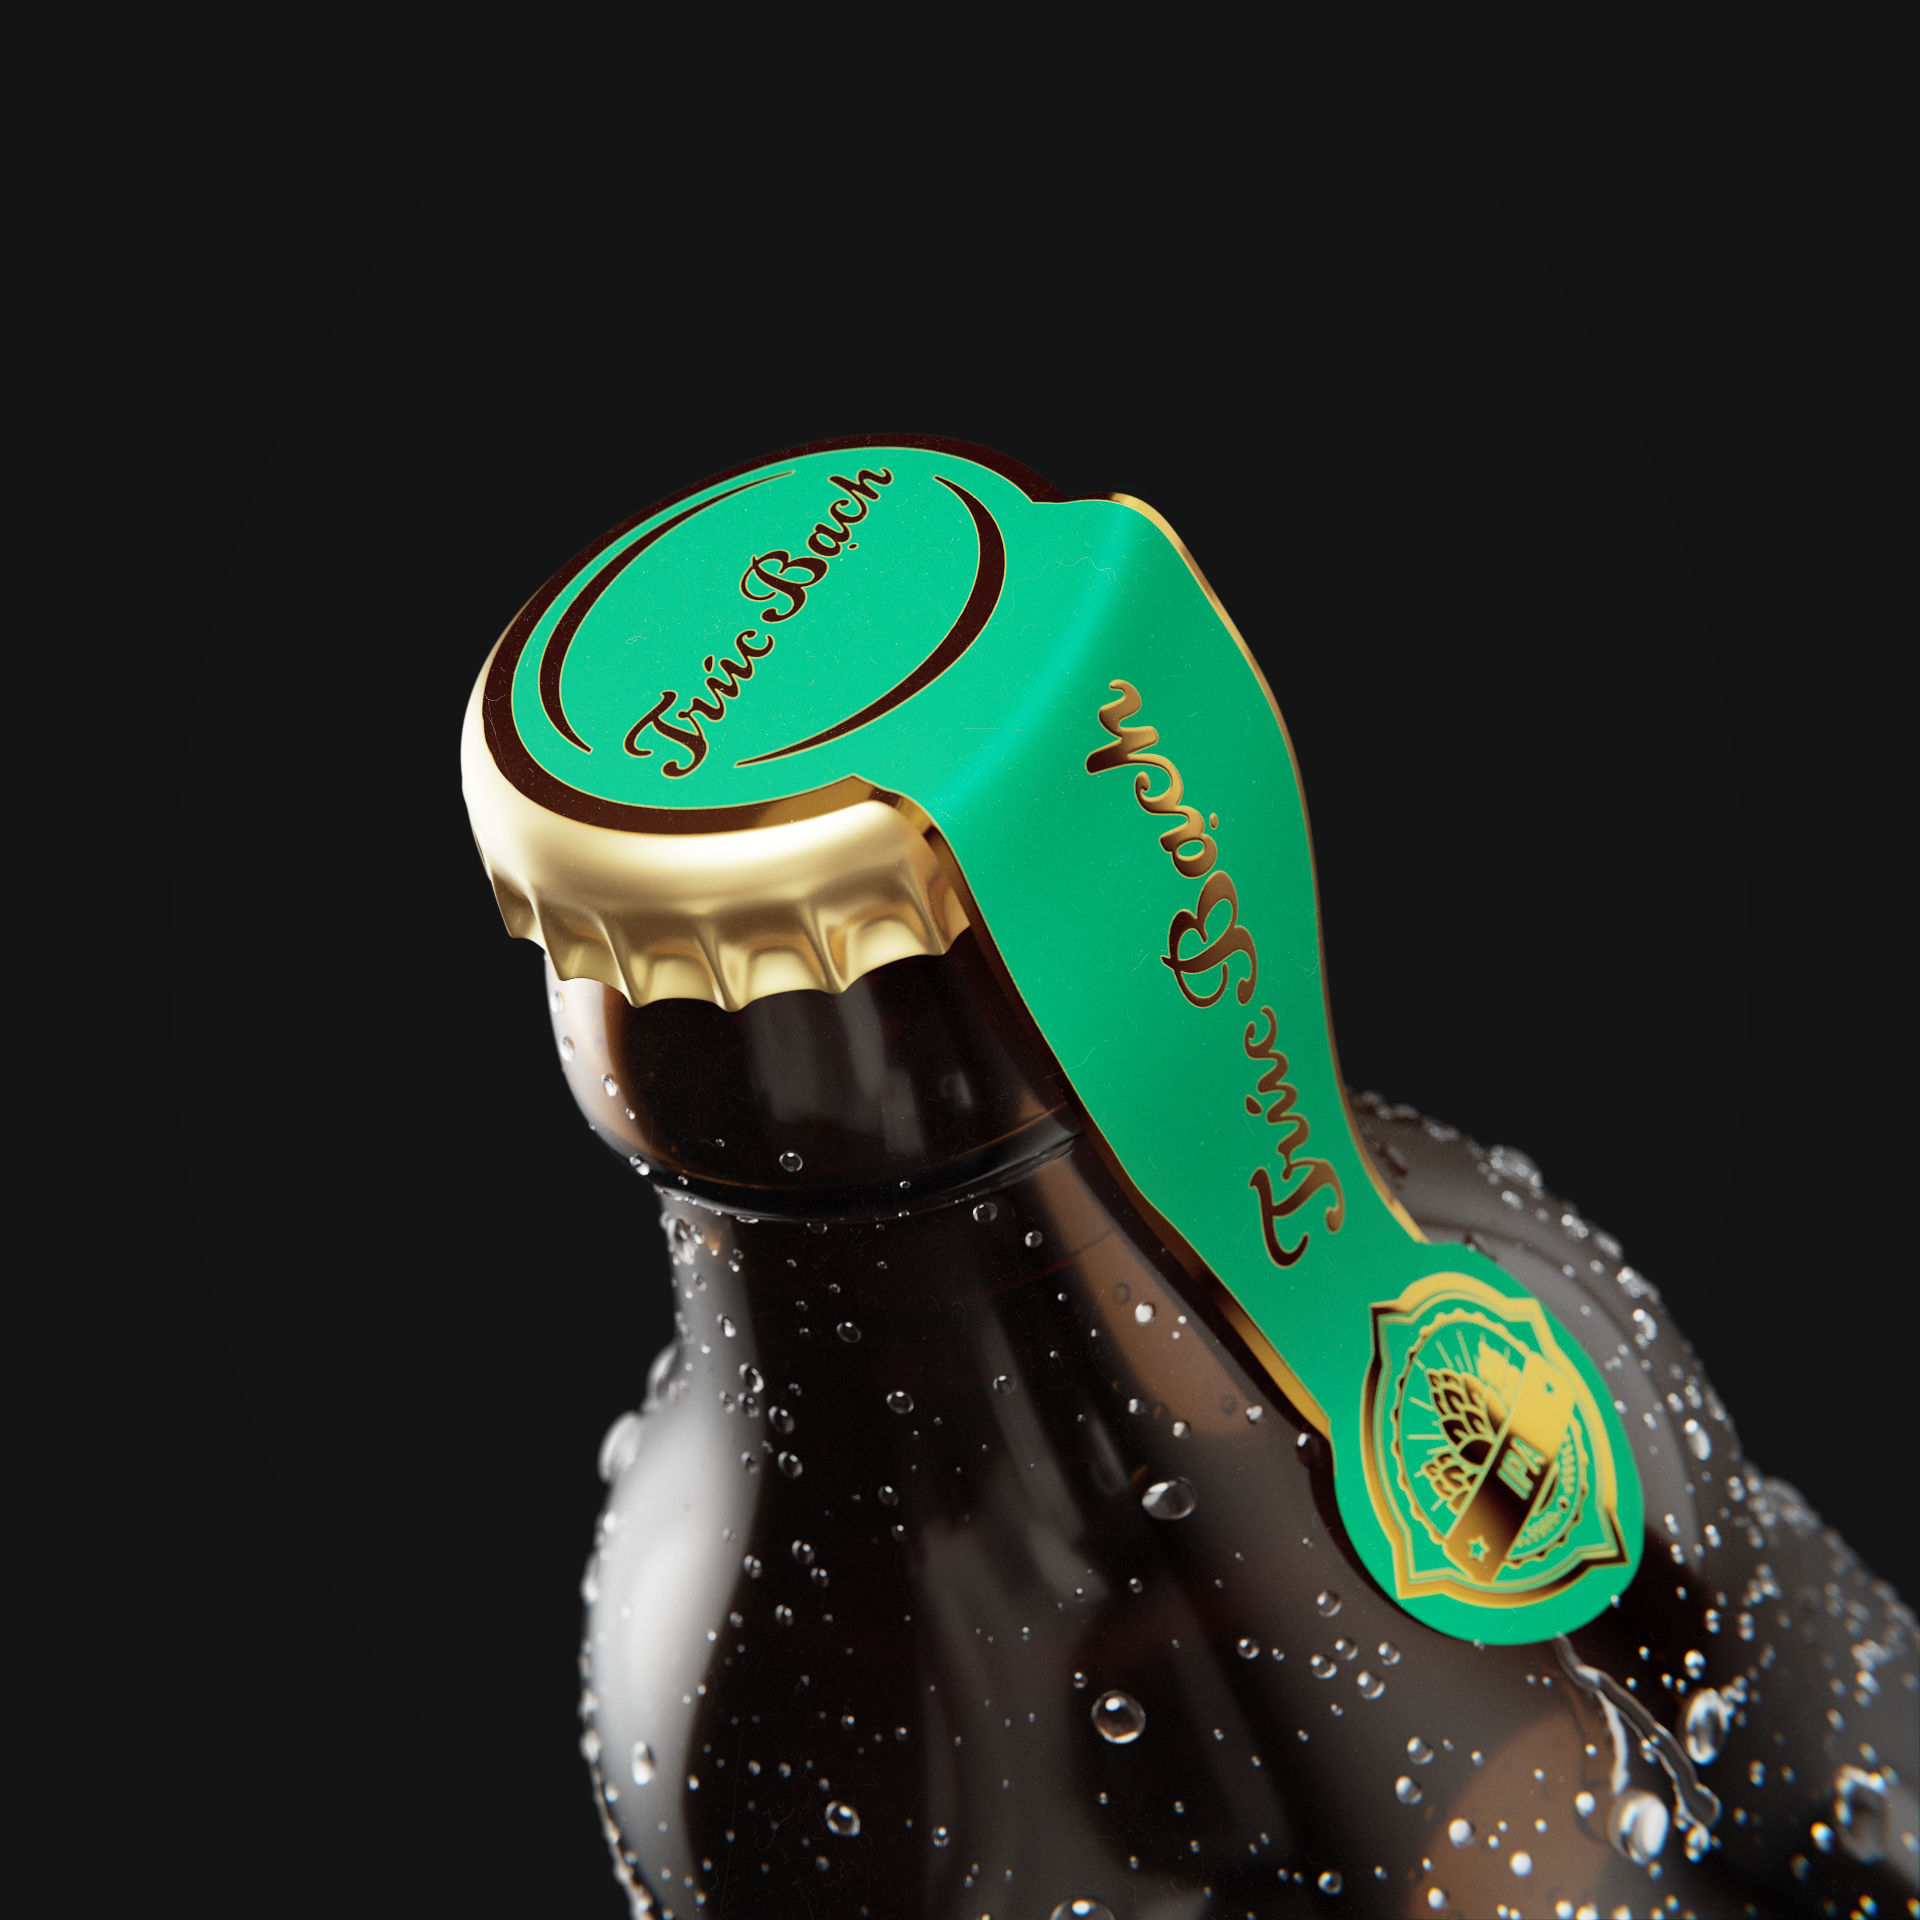 TrucBach IPA Scene 03 A1 - Trúc Bạch IPA Beer CGI Product Visualization - Sonny Nguyen